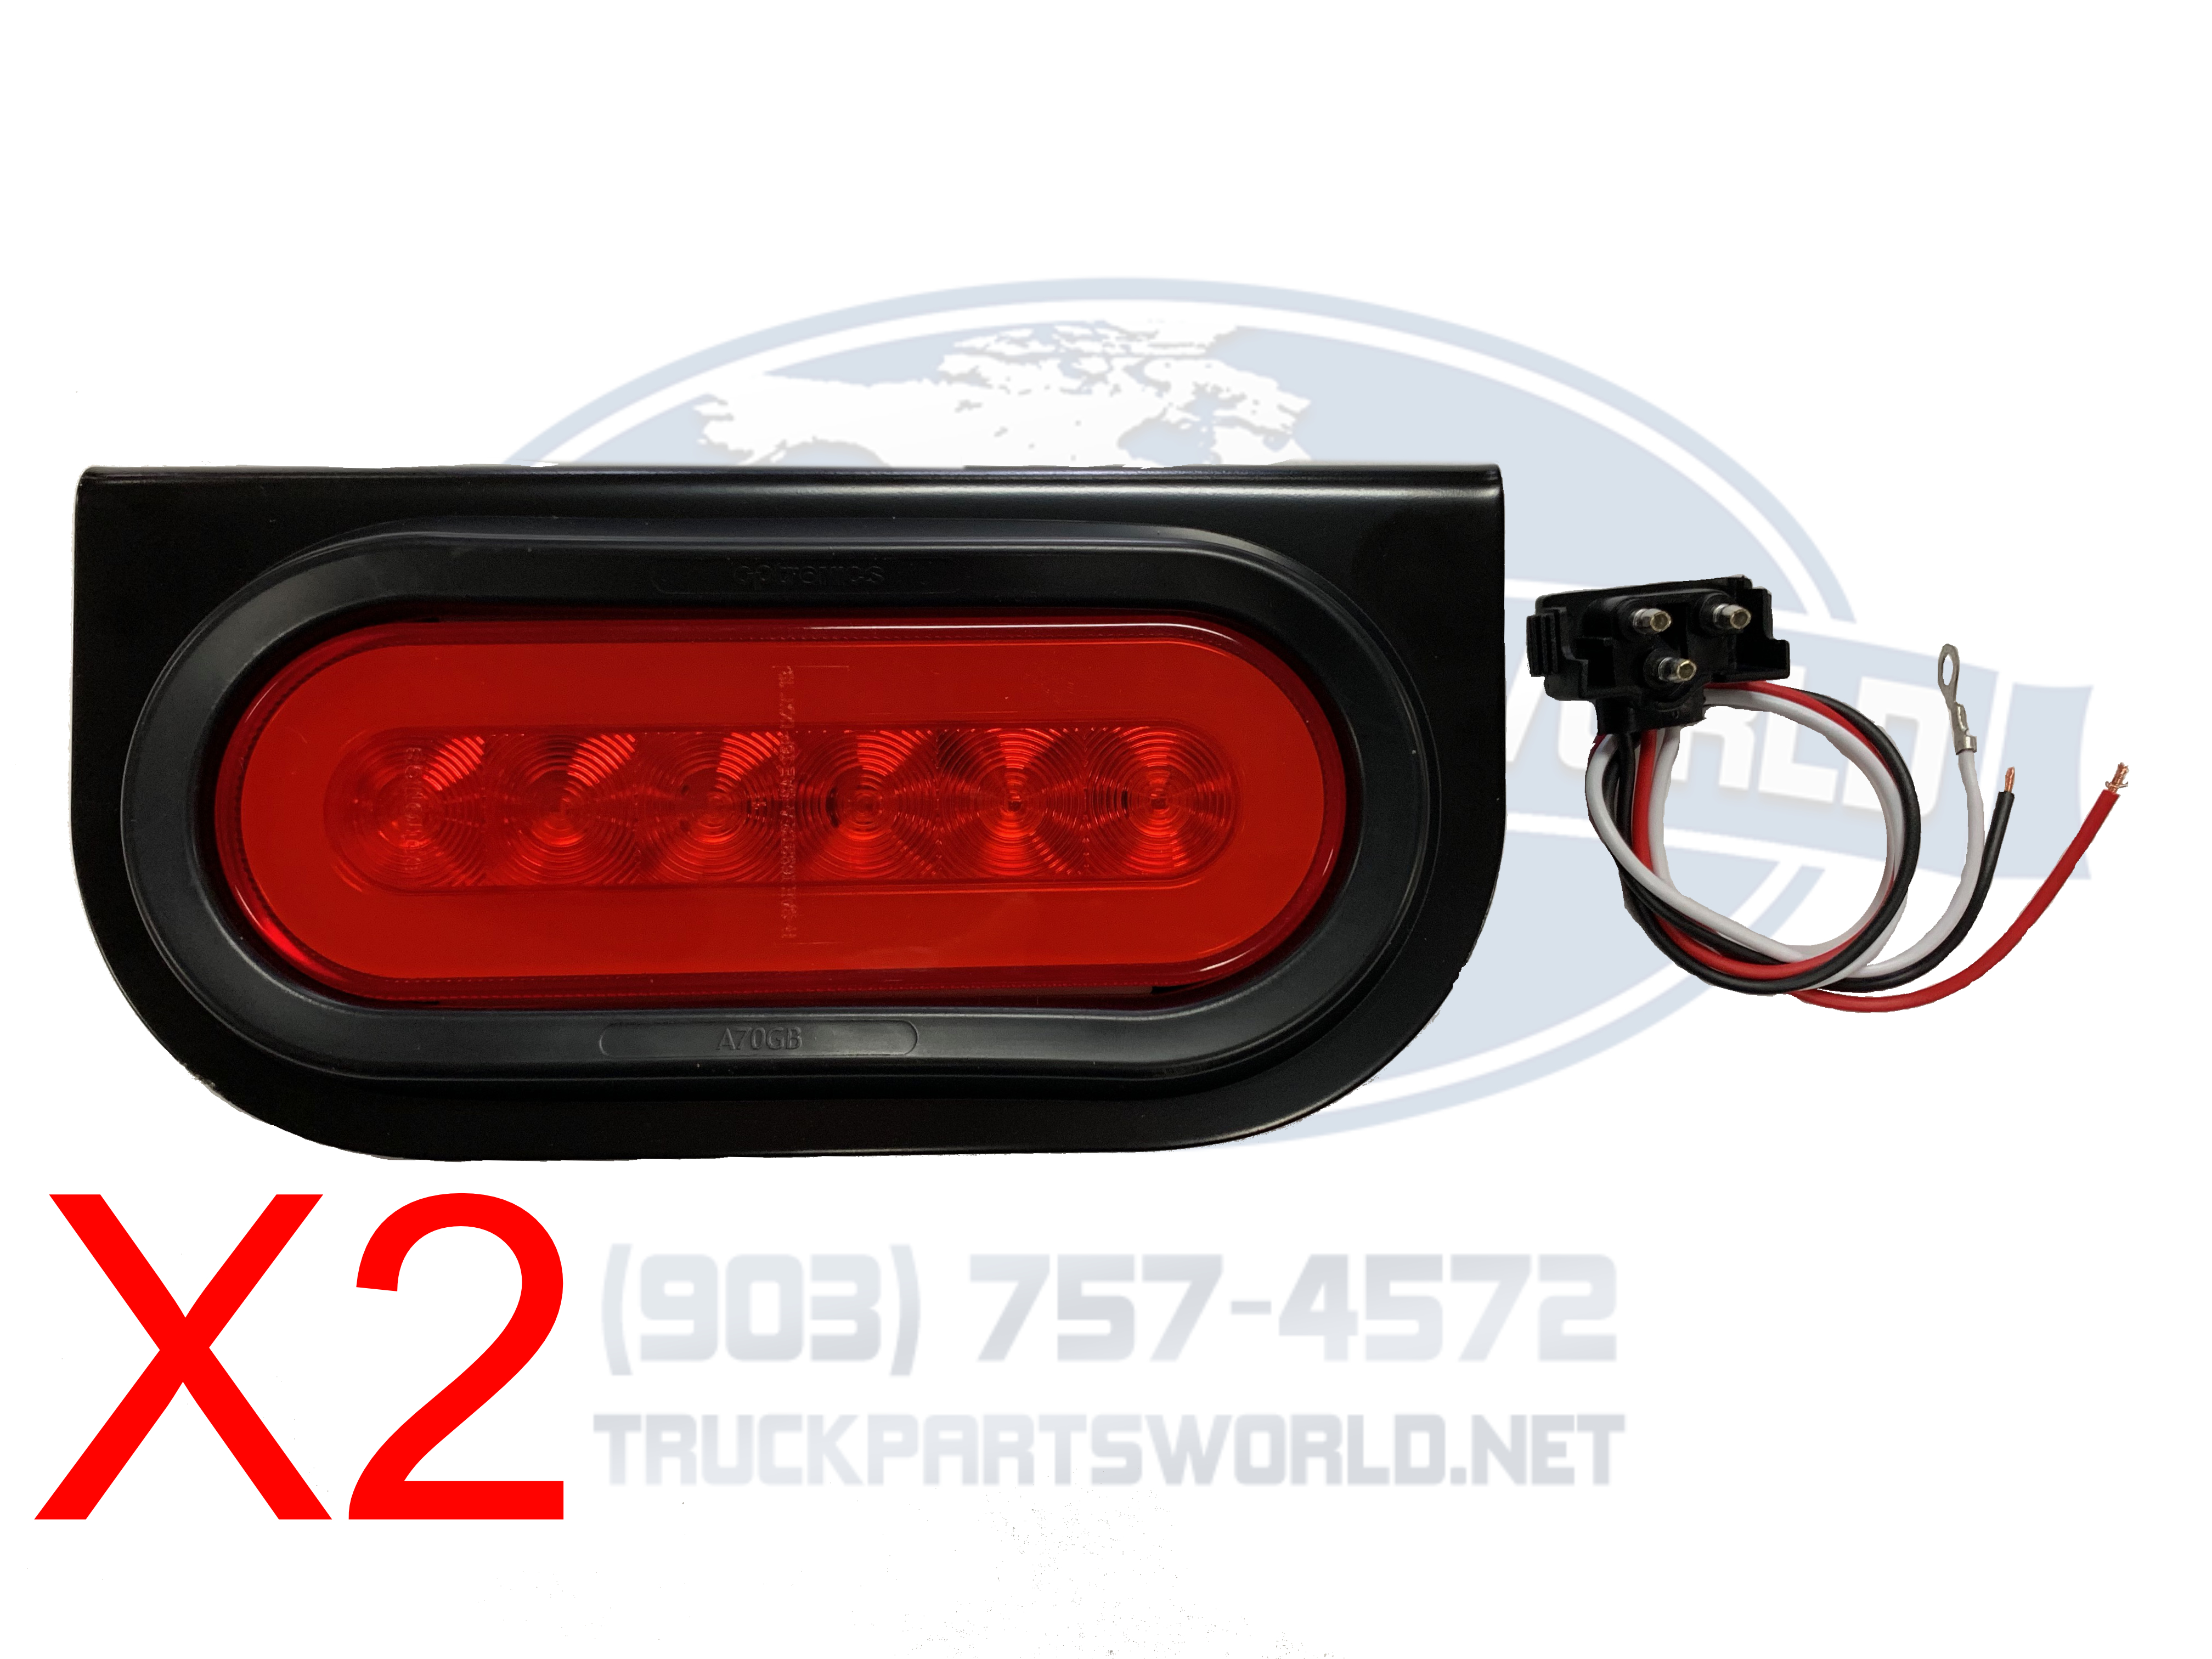 2pc 6 inch Red Oval LED Trailer Tail Light Kit Surface-Mount IP67 Waterproof SAE S2T2I6 DOT FMVSS 108 Trailer Brake Lights for Boat Trailer RV Trucks Stop Turn Tail 